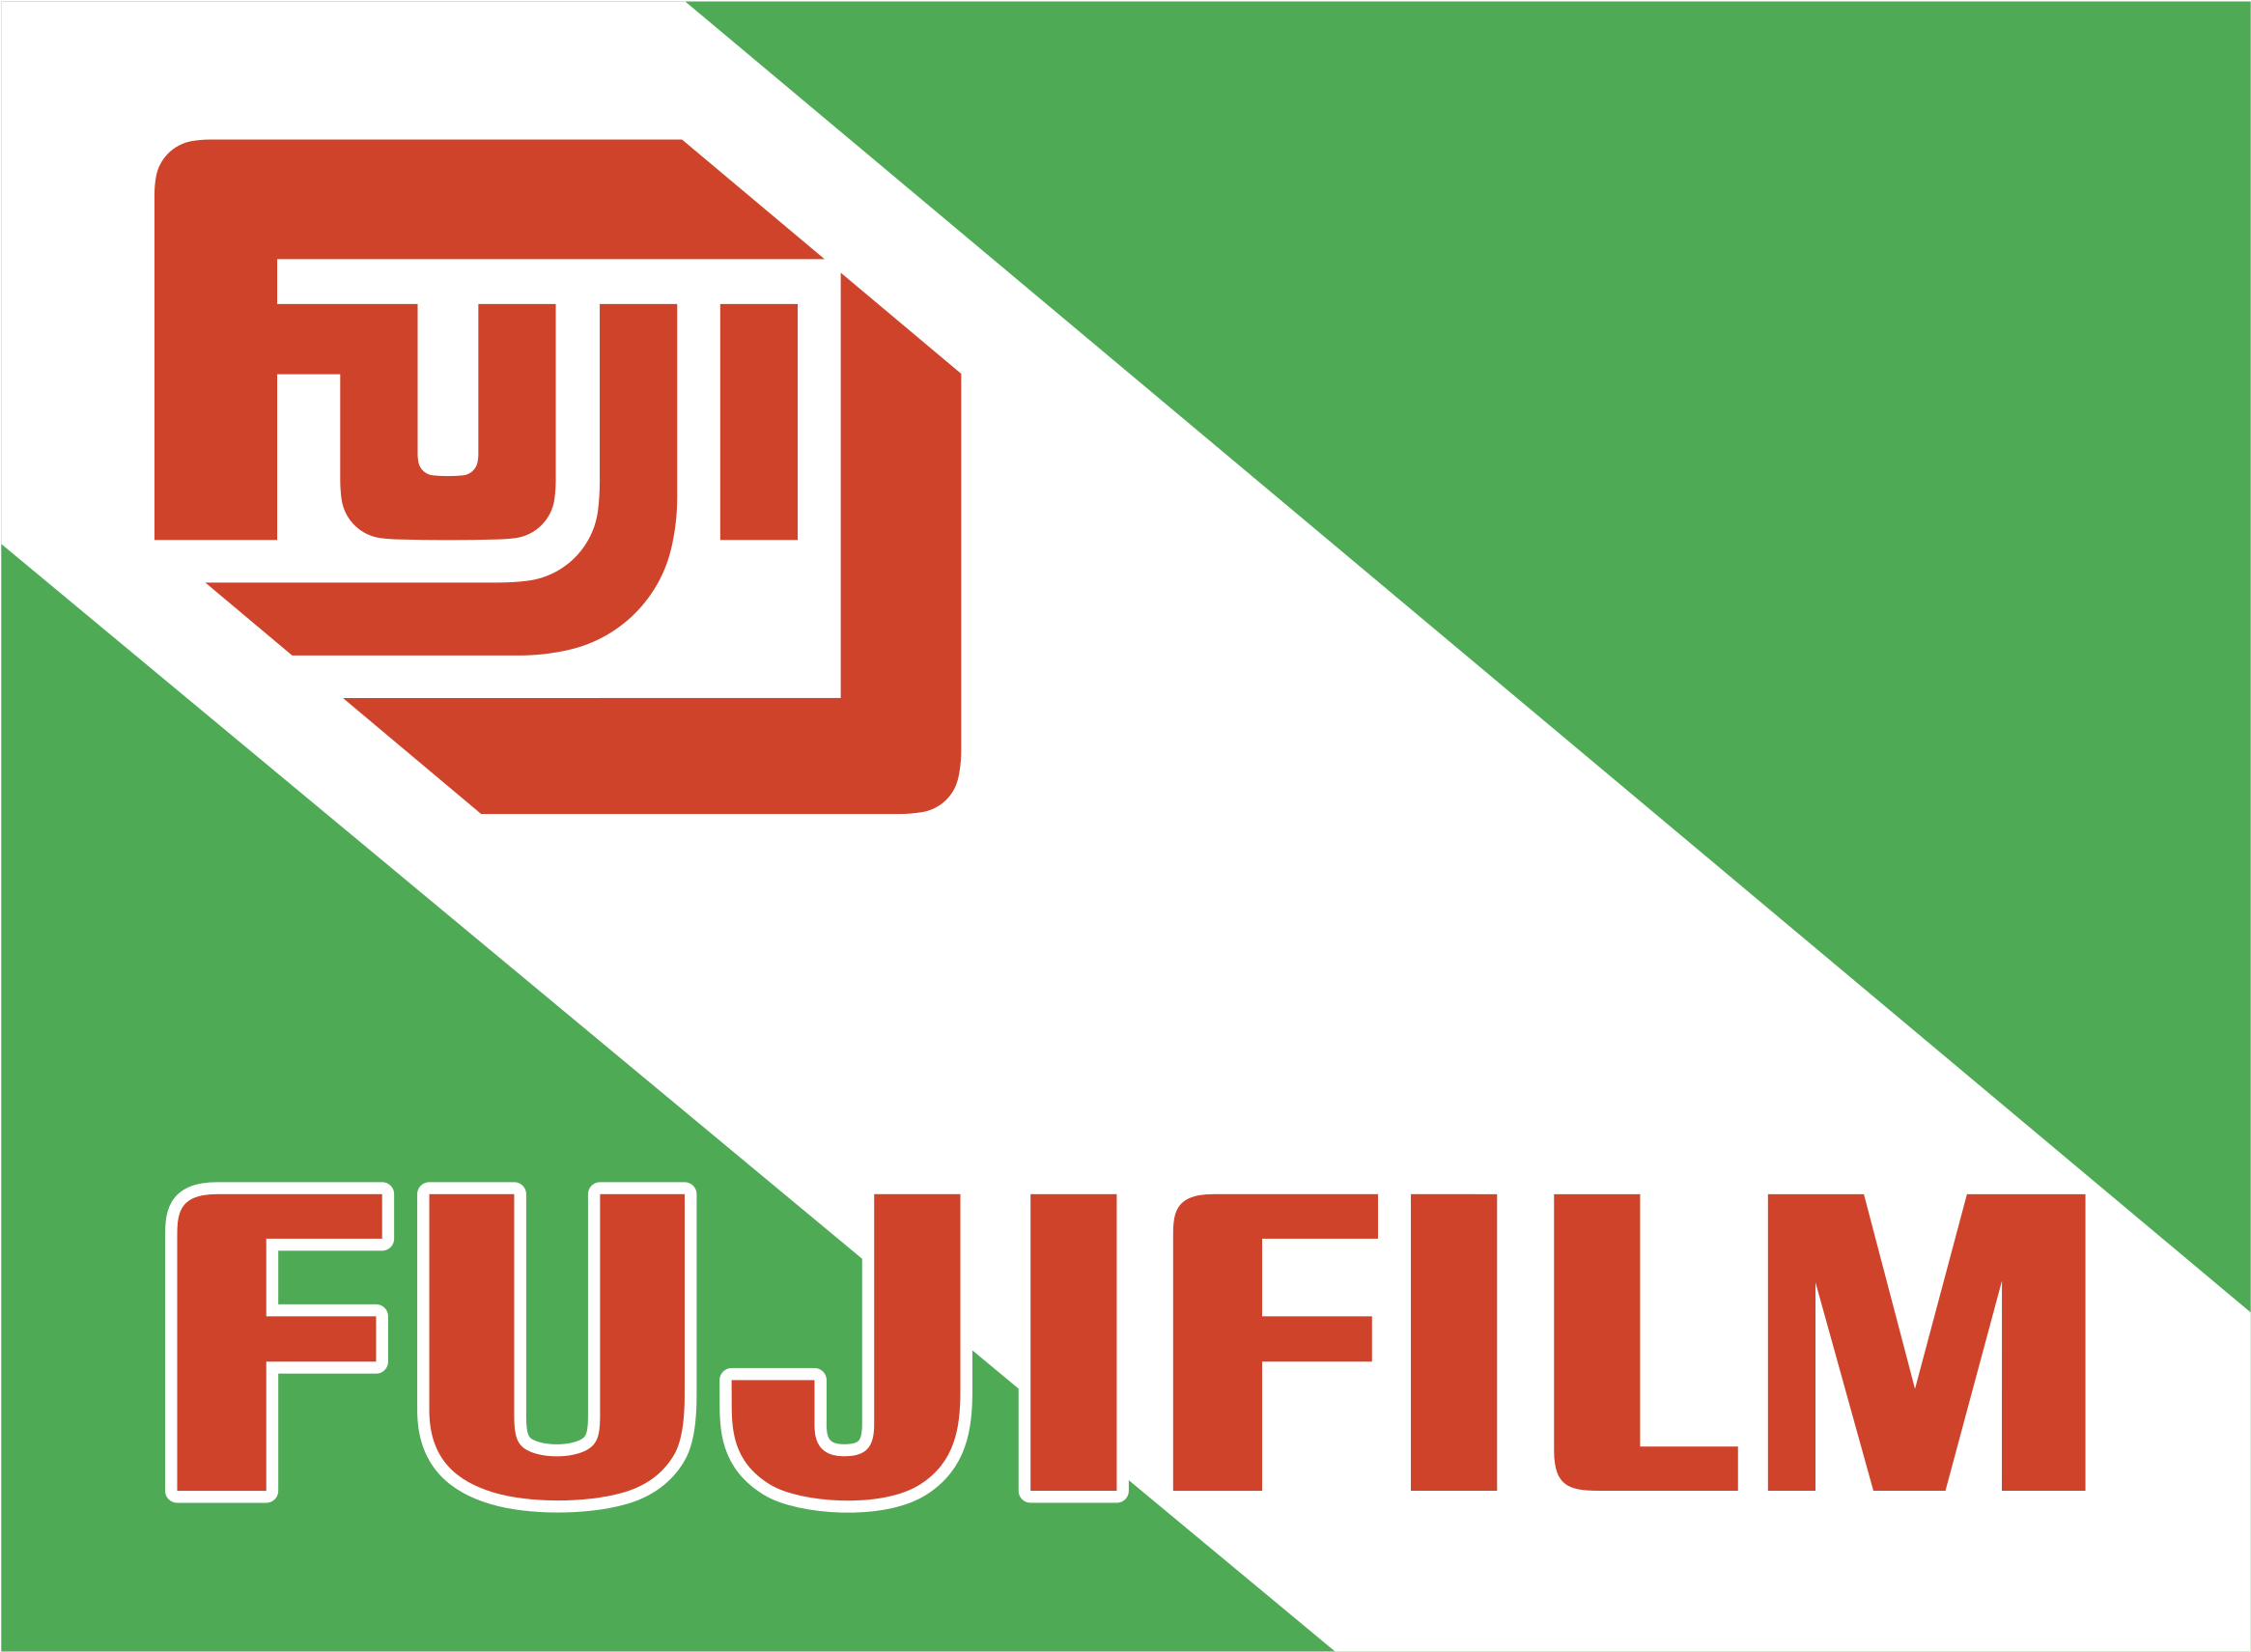 image-9986603-309-3099546_fujifilm-logo-png-transparent-fujifilm-logo-45c48.png